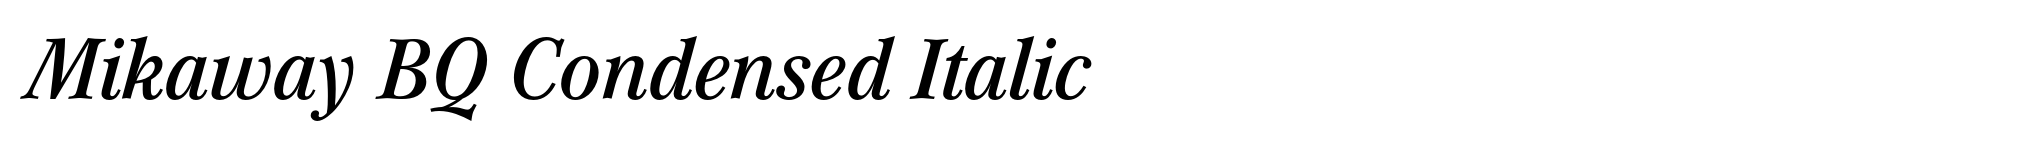 Mikaway BQ Condensed Italic image